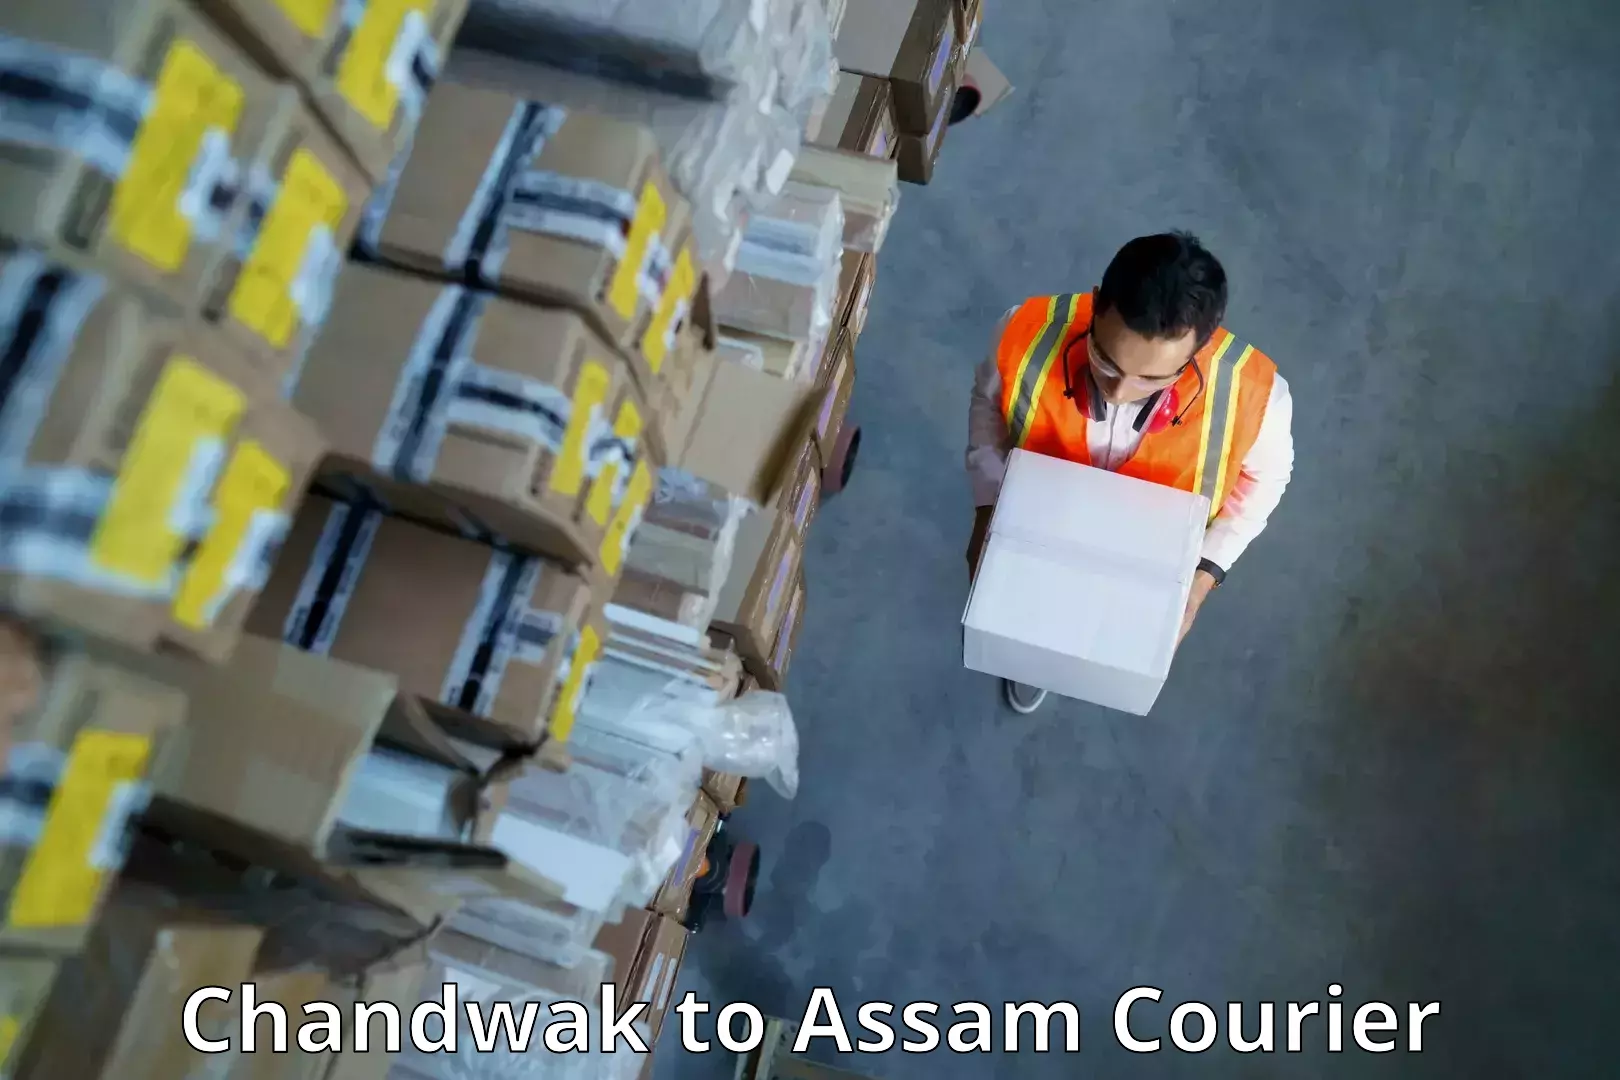 Professional courier handling Chandwak to Assam